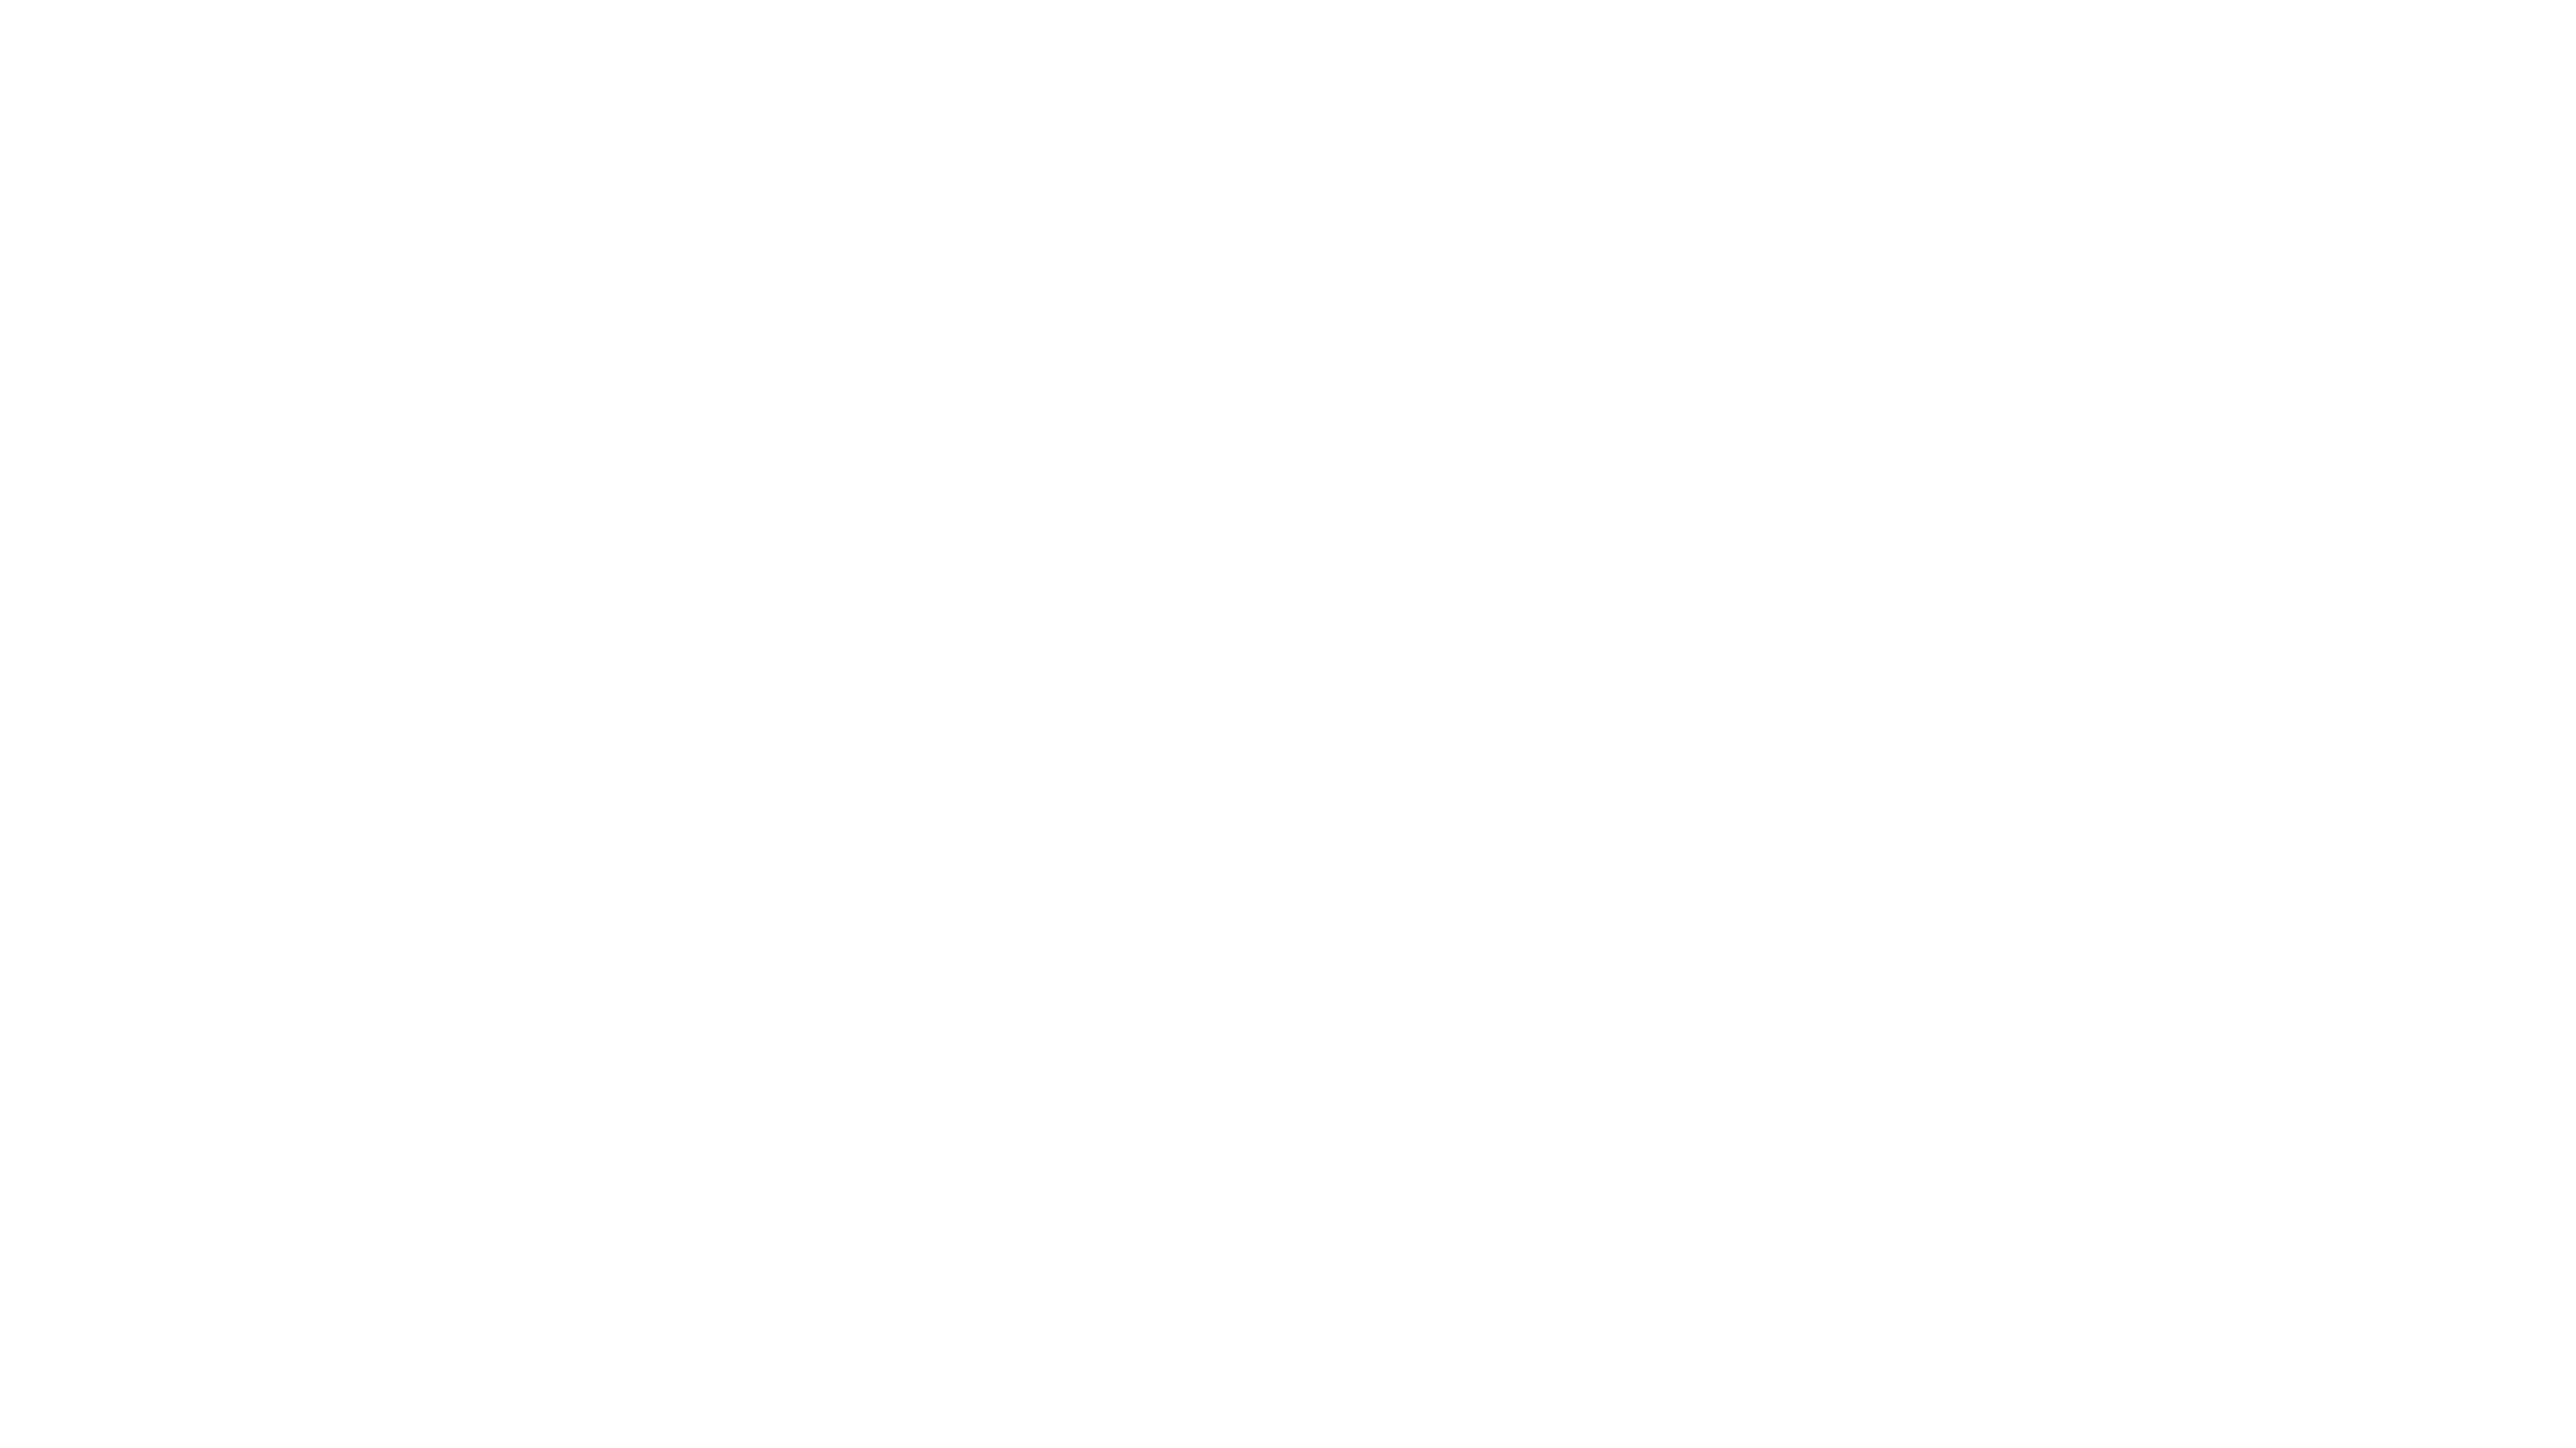 MTV_Logo